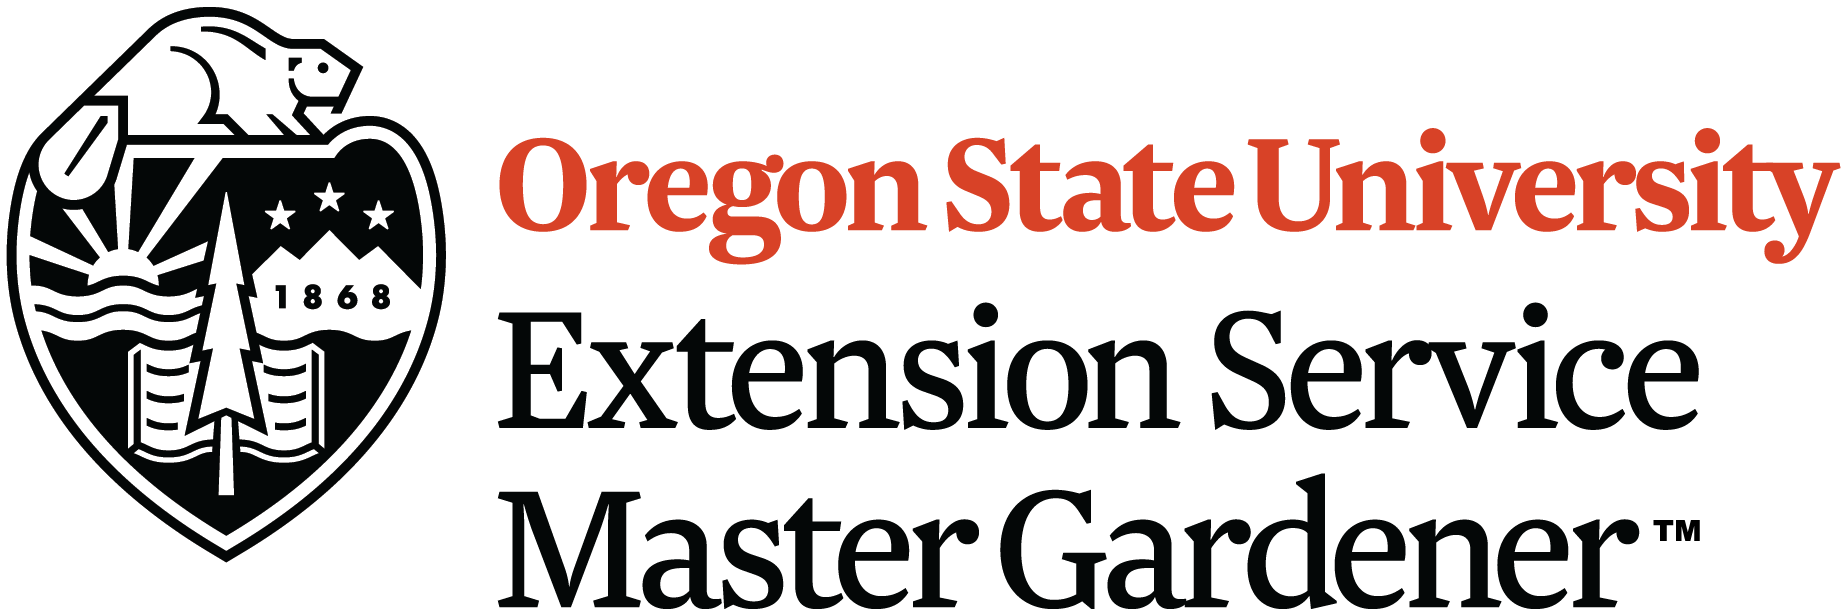 OSU Extension Service Master Gardener logo